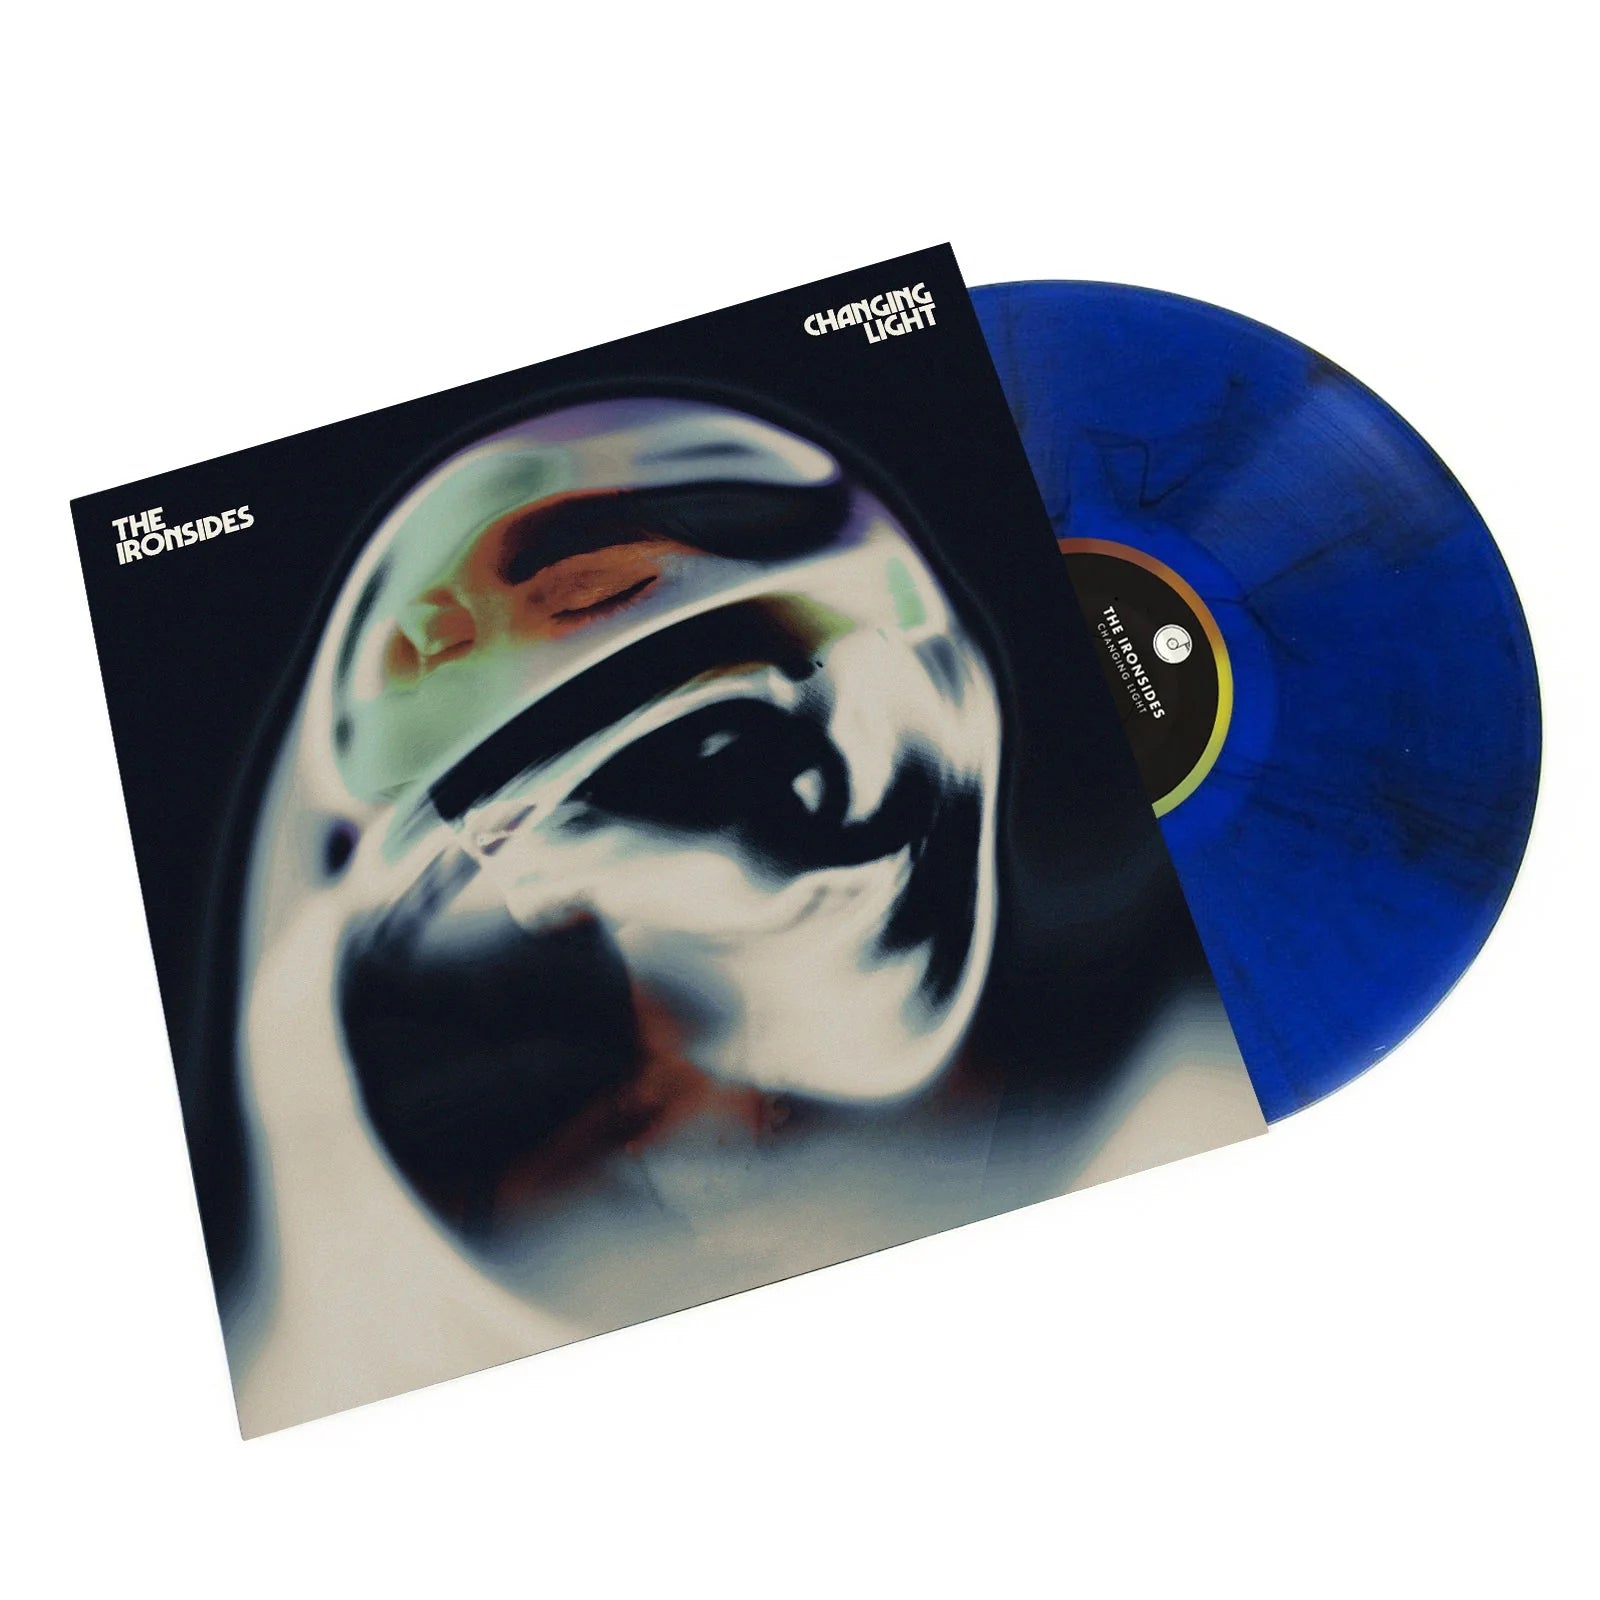 Changing Light: Limited Transparent Blue + Black Swirl Vinyl LP